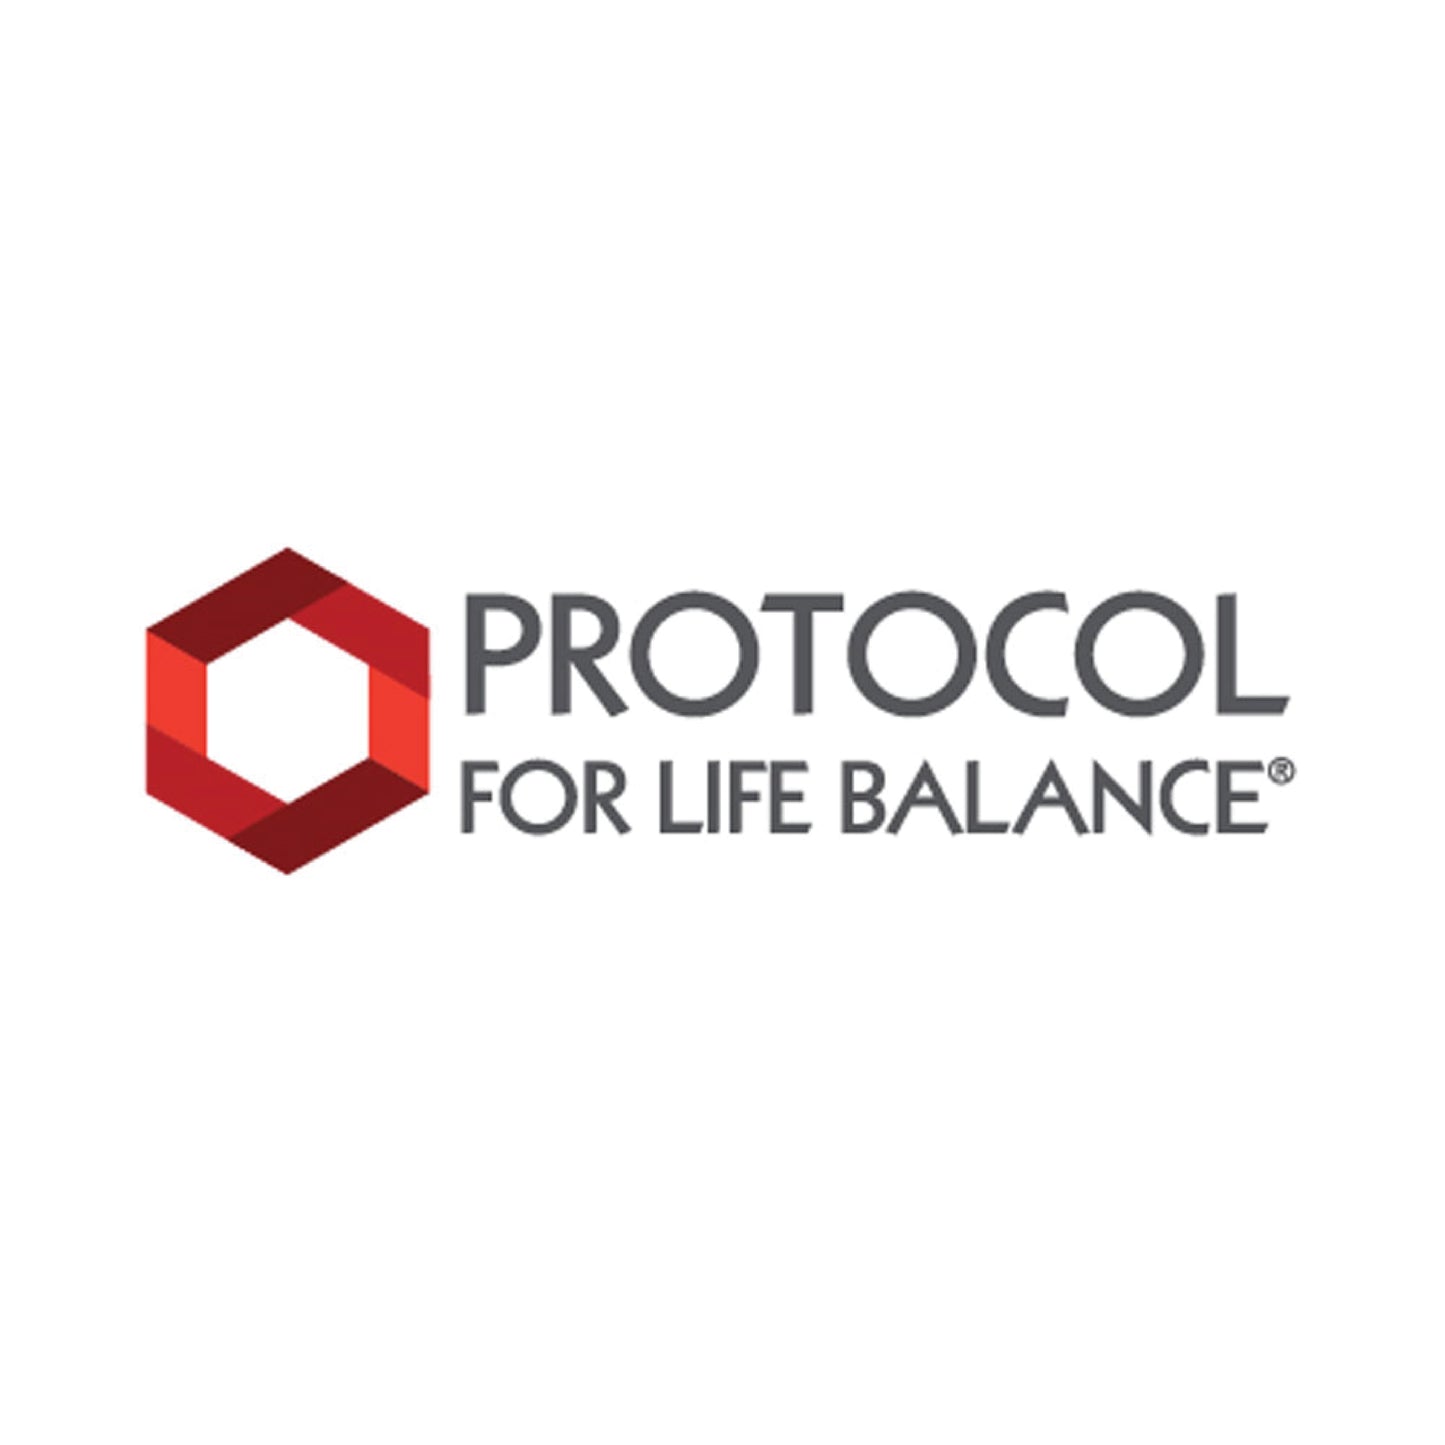 Protocol for Life Balance, L-Glutamine, 1,000 mg, 120 Veg Capsules - Bloom Concept